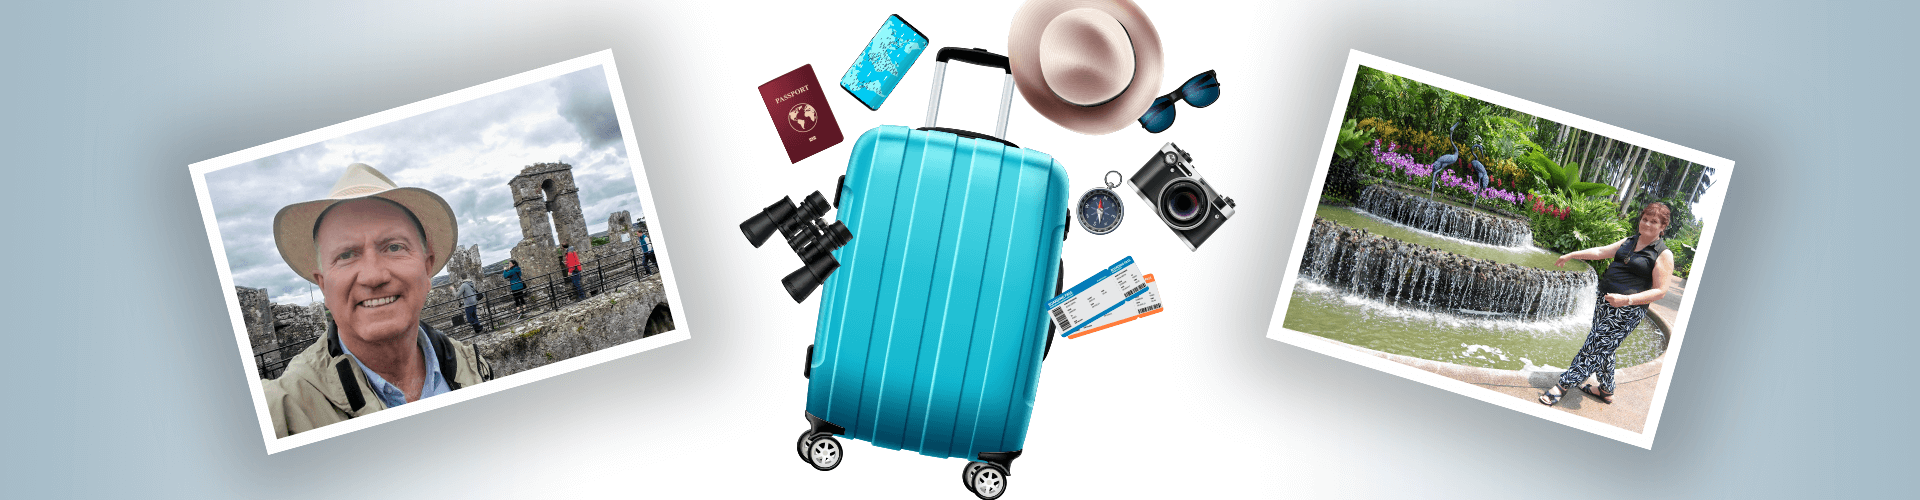 Teal suitcase, passport, hat, binoculars, boarding passes, compass, camera, sunglasses